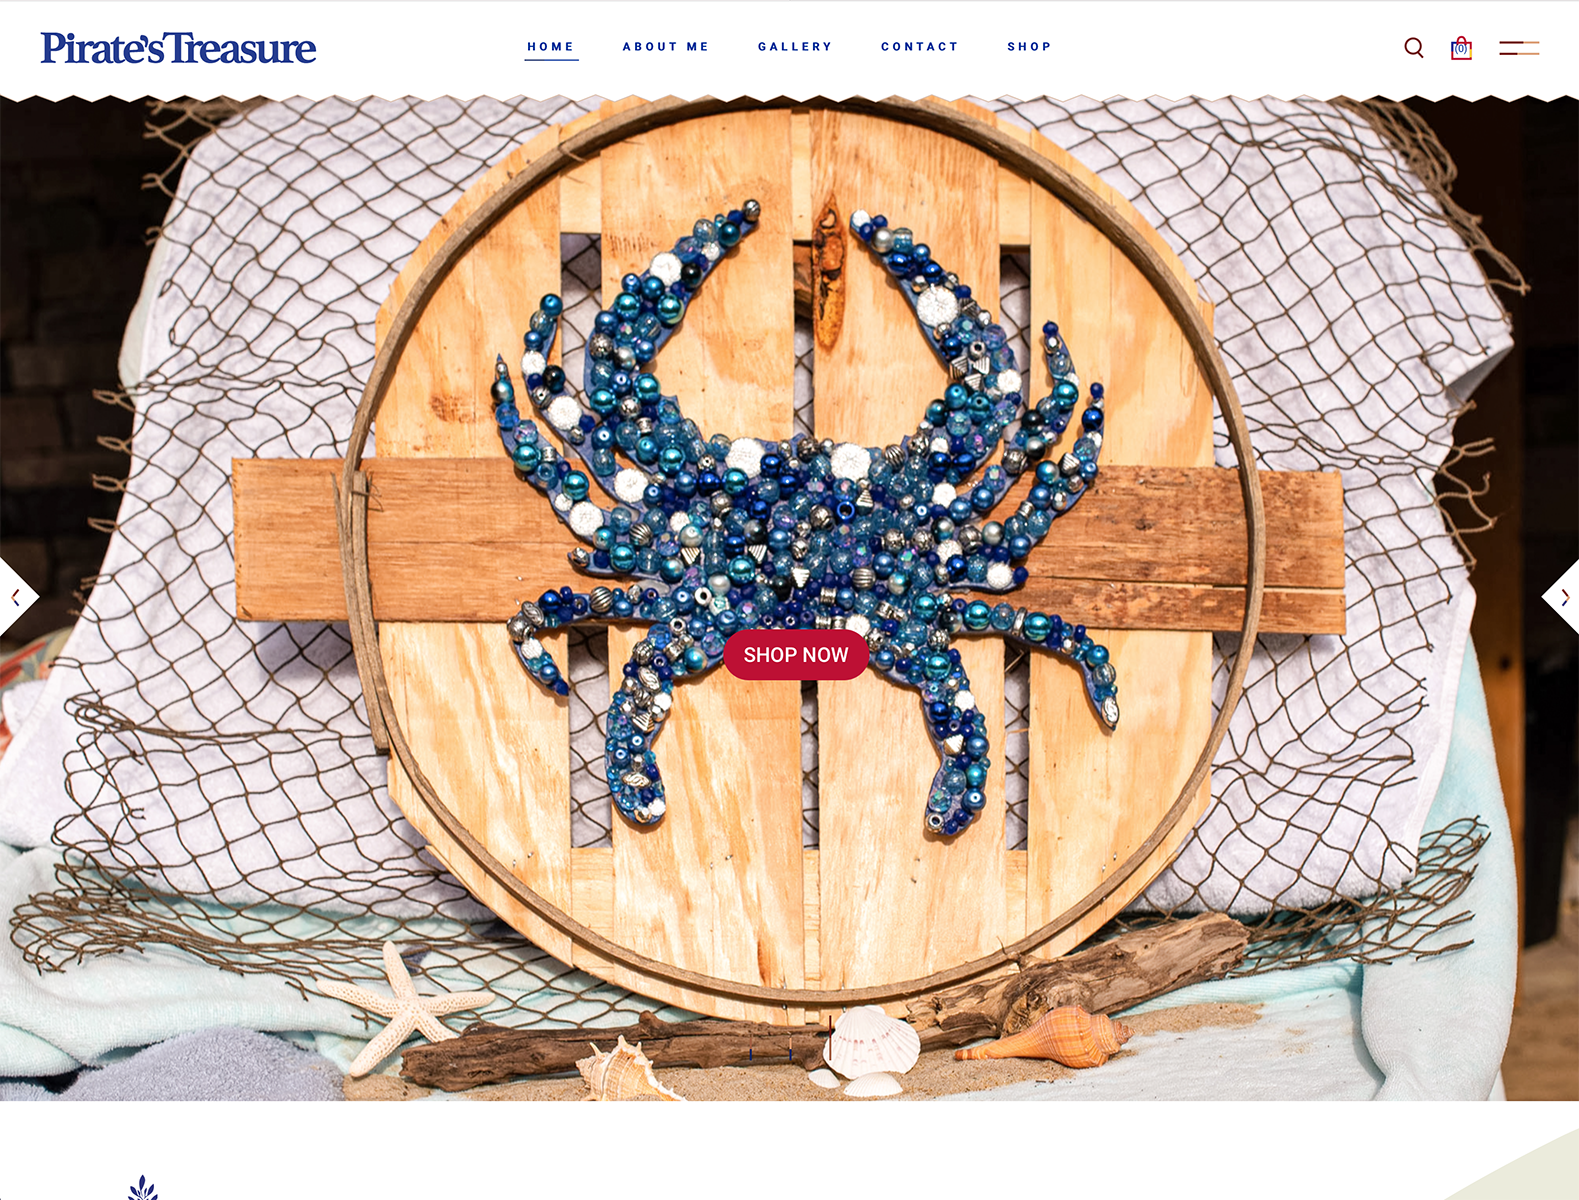 Whale Works Design Pirate's Treasure Website